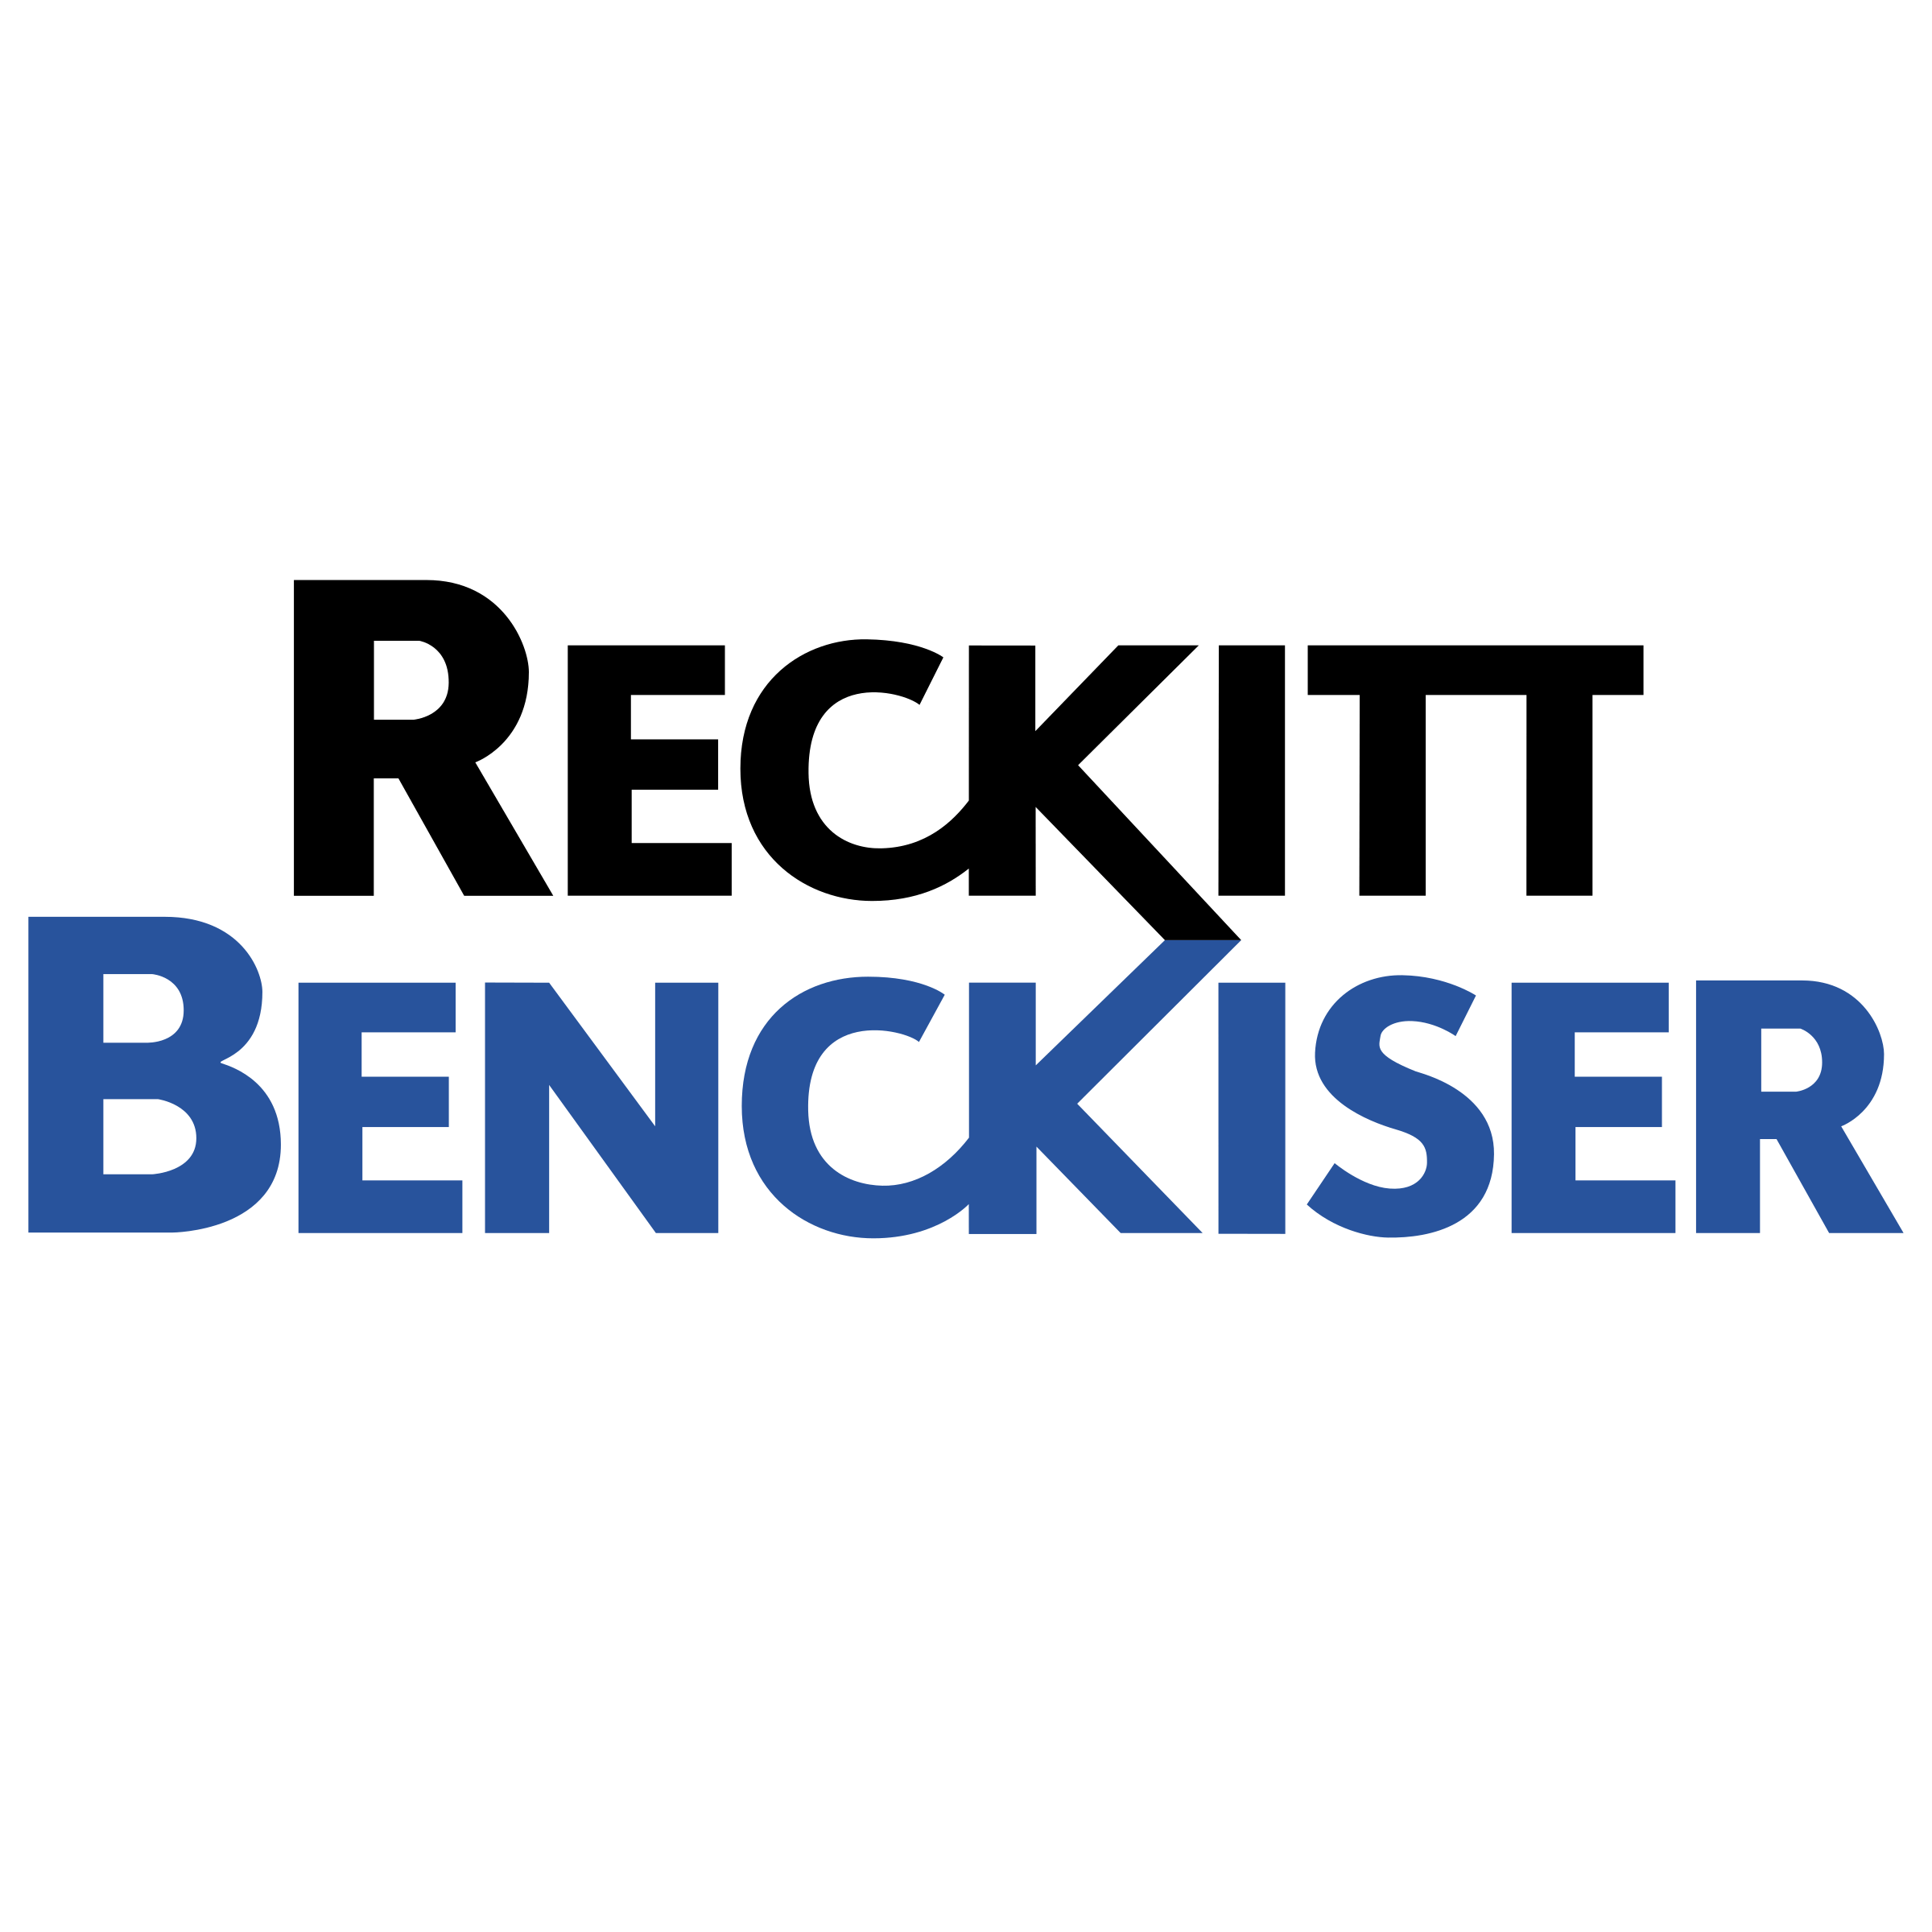 Reckitt Logo - Reckitt Benckiser Logo PNG Transparent & SVG Vector - Freebie Supply